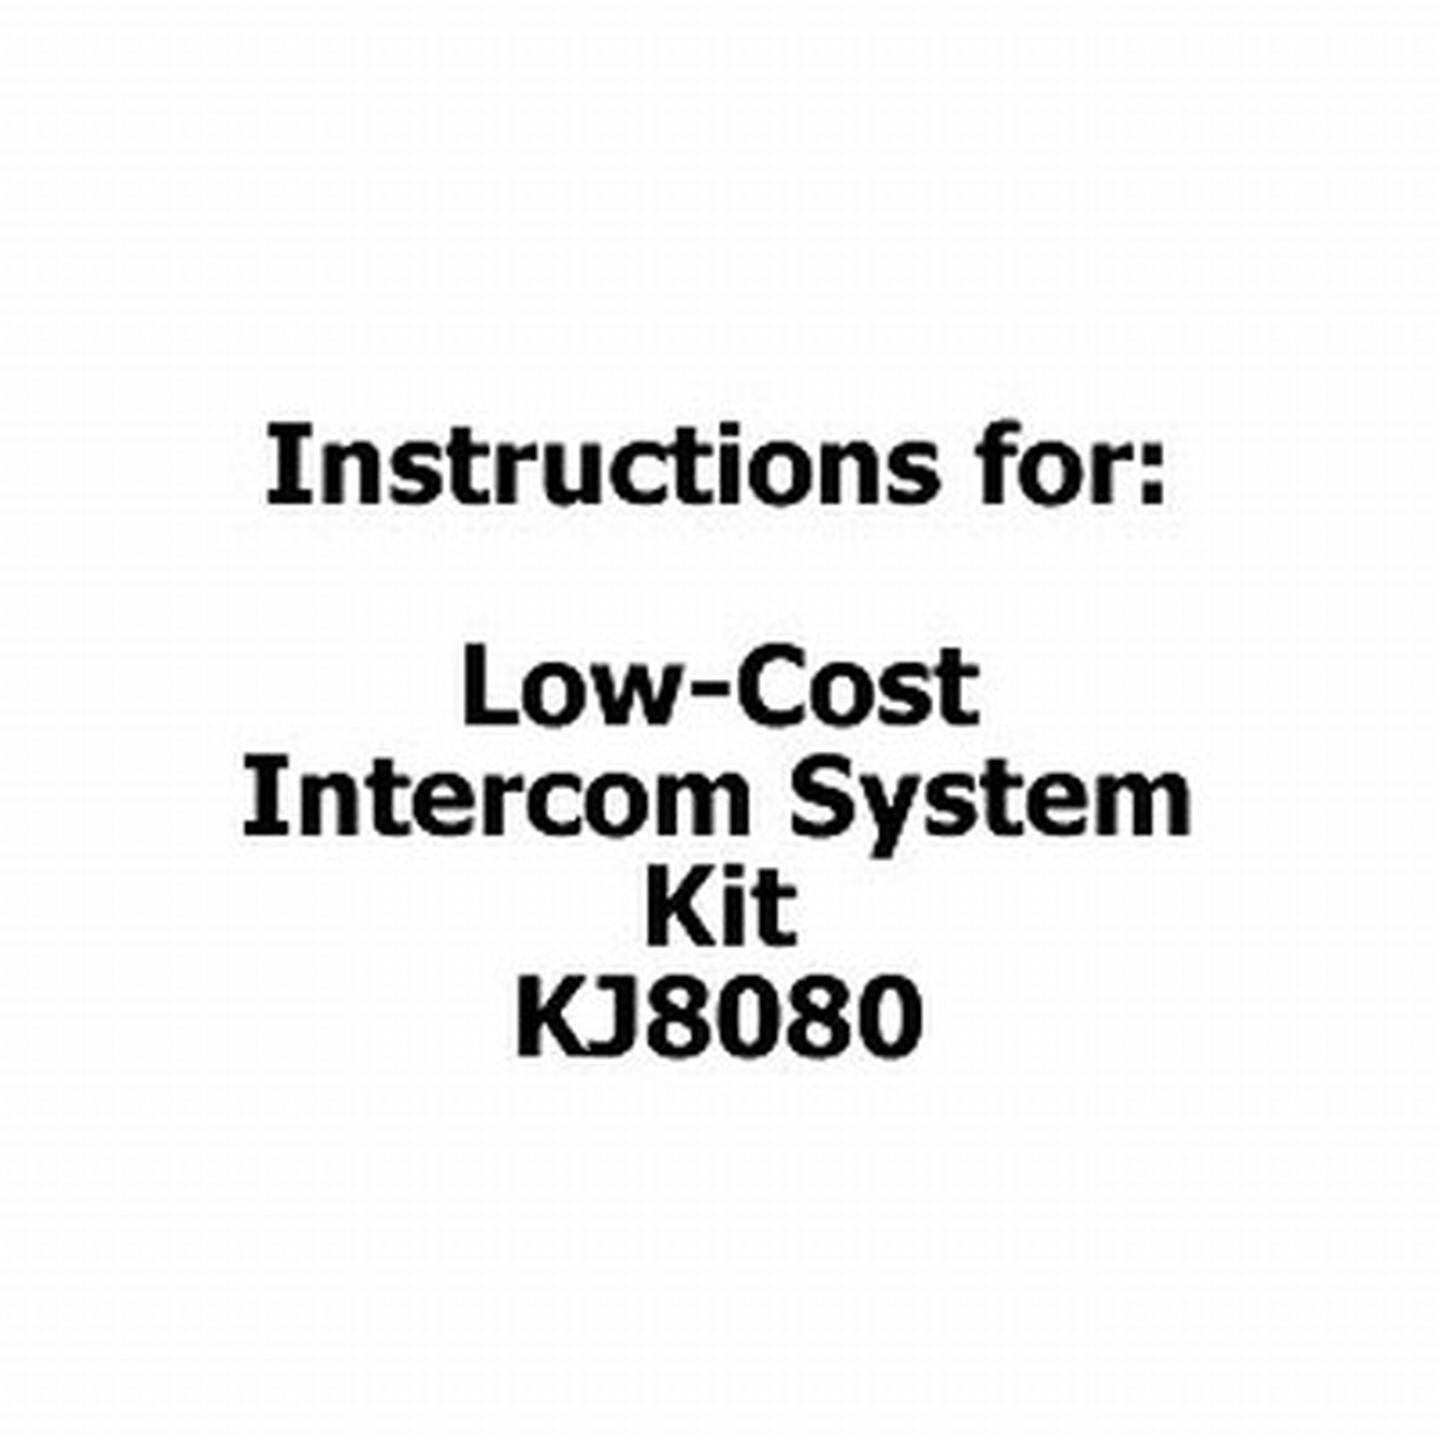 Instructions for Low-cost Intercom System Kit - KJ8080